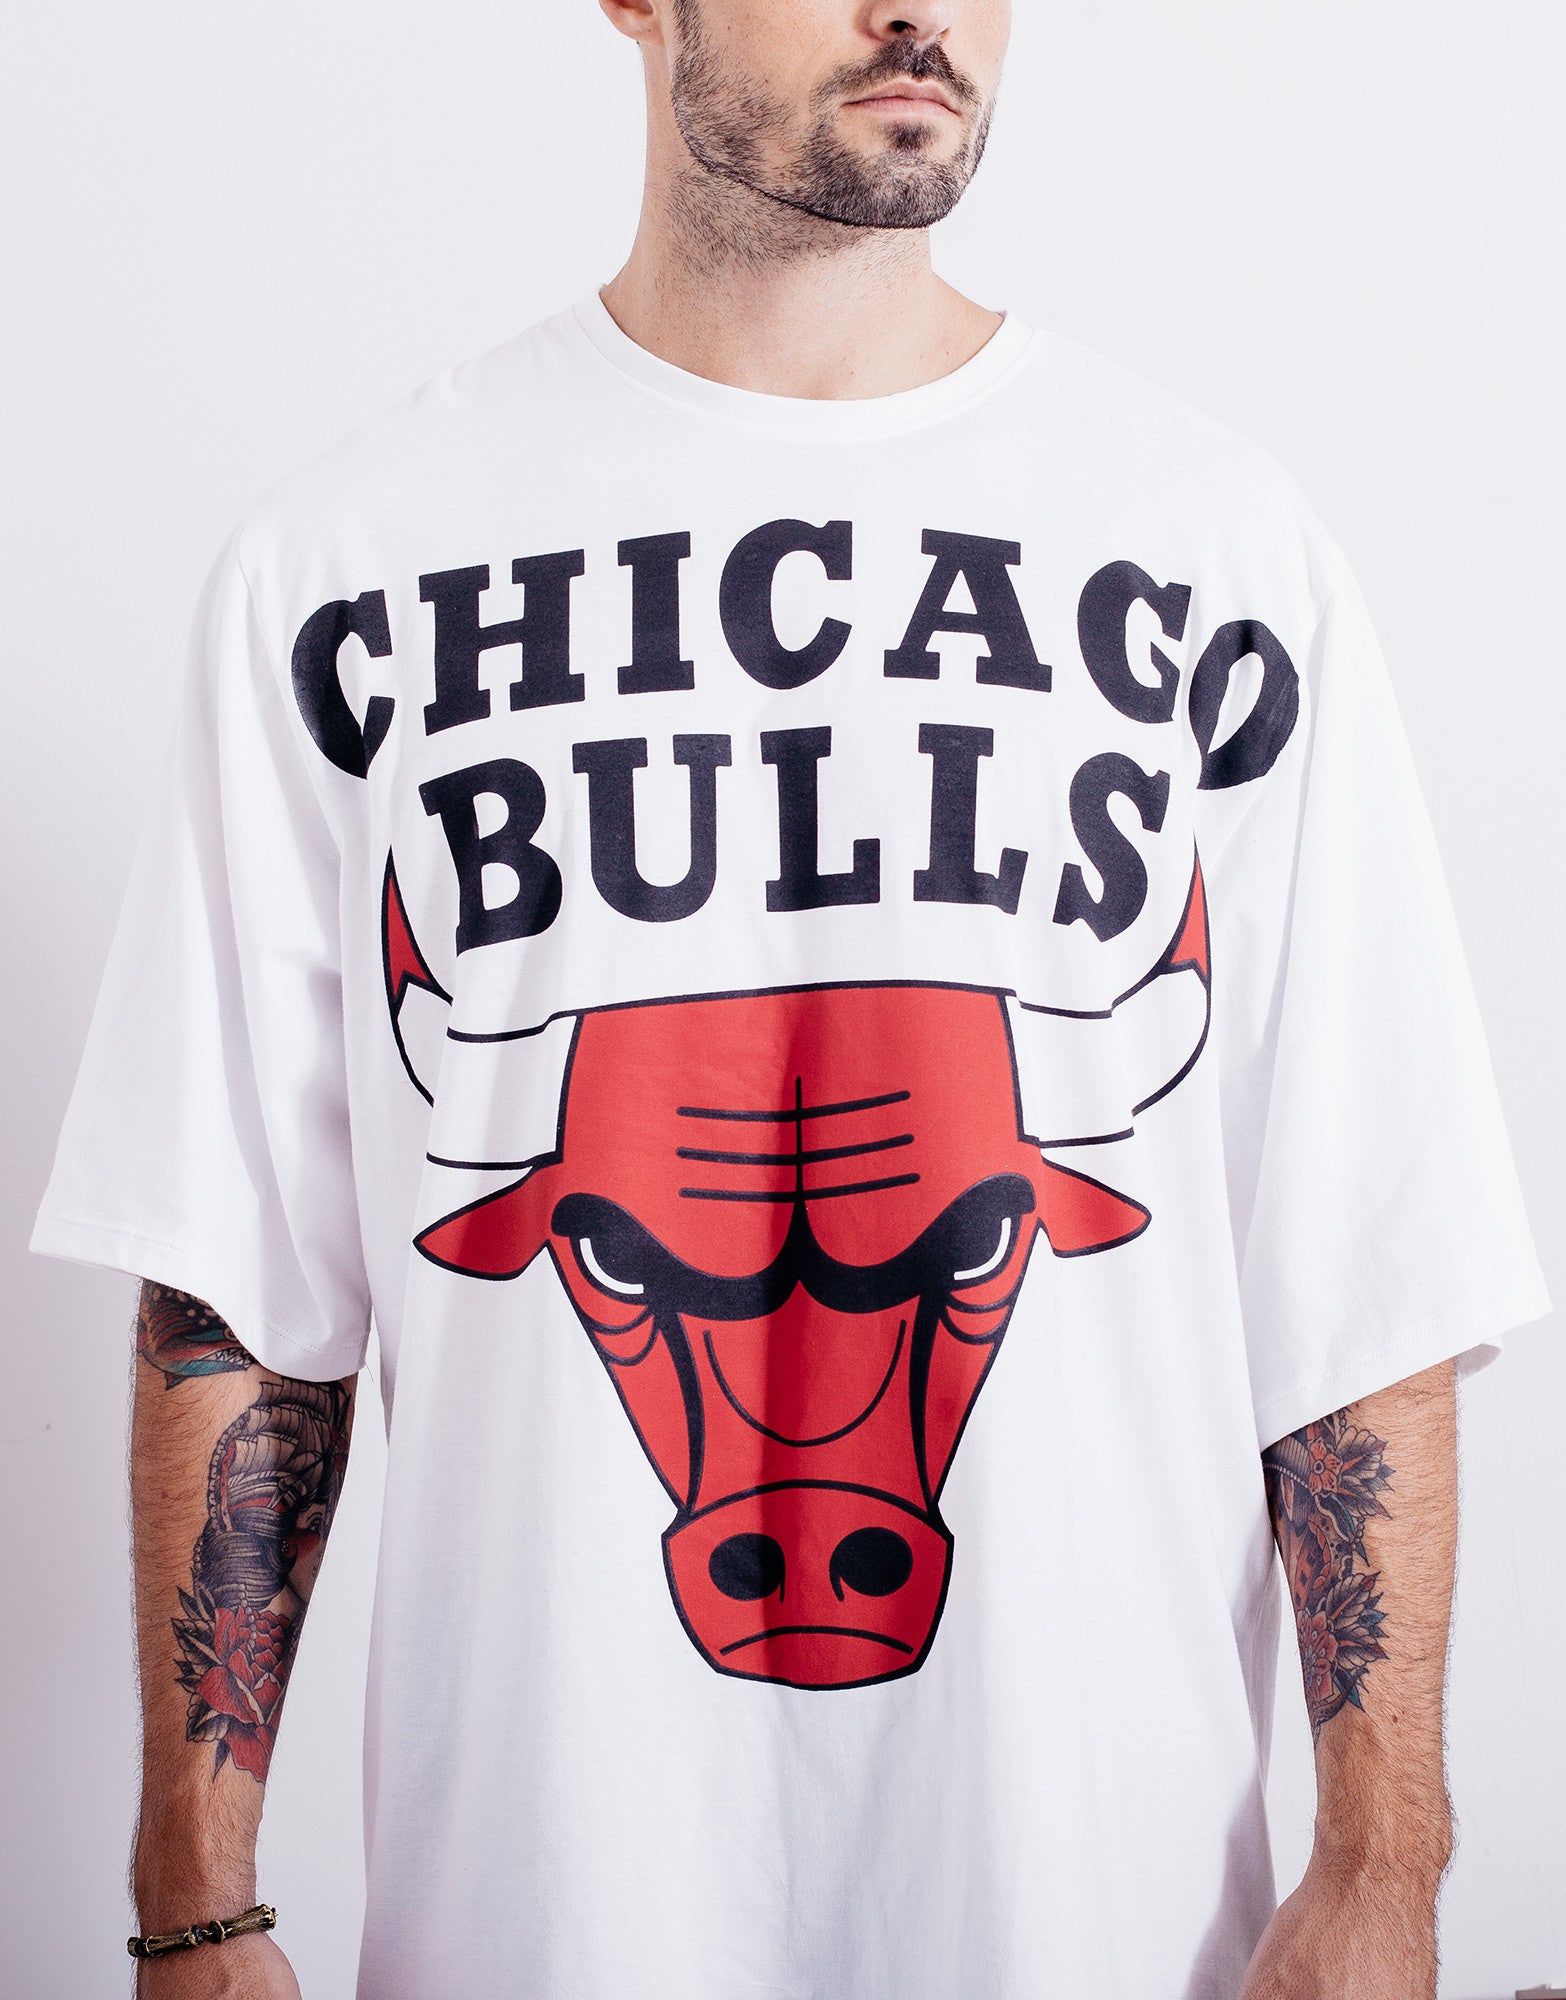 bulls t shirt